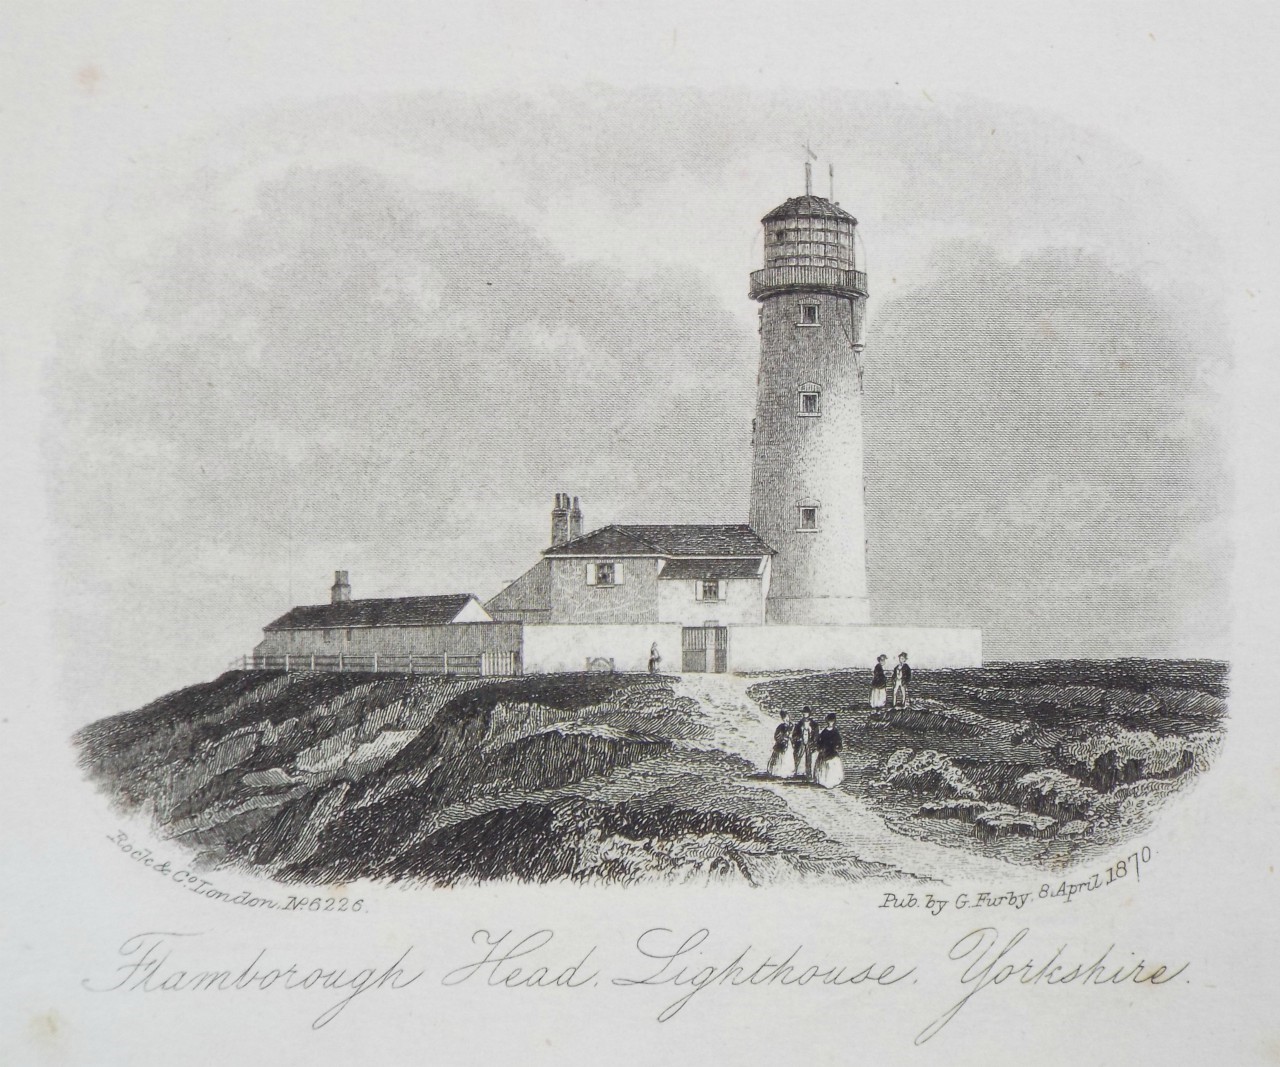 Steel Vignette - Flamborough Head, Lighthouse, Yorkshire.